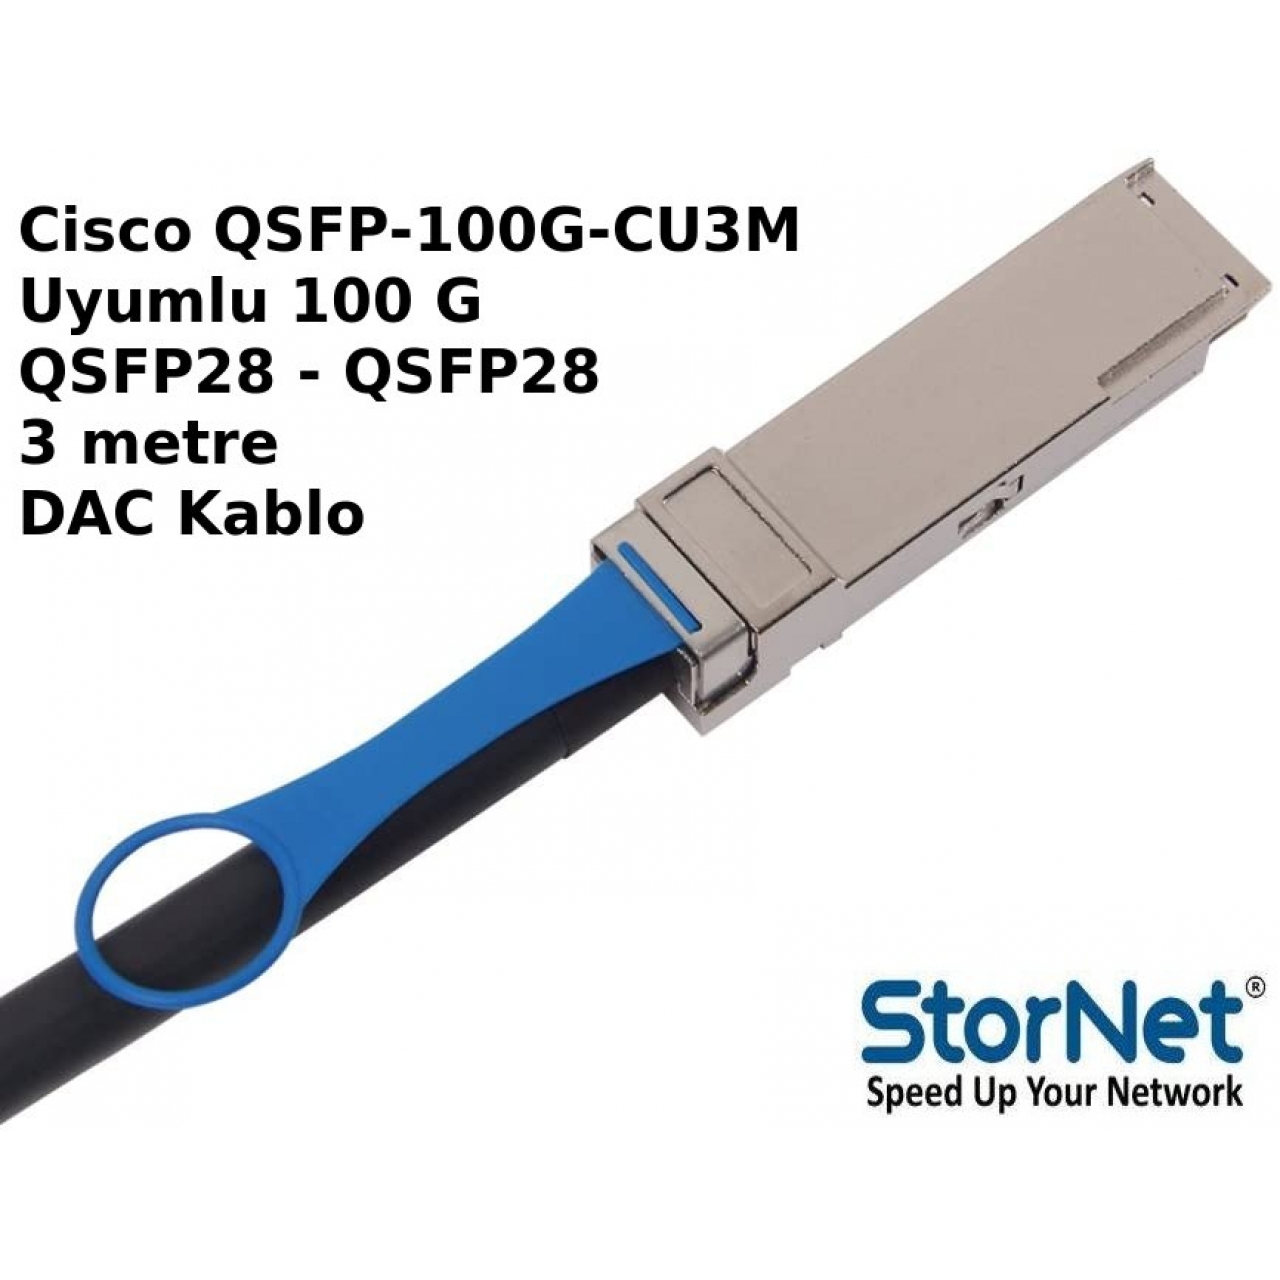 DAC Kablo Cisco QSFP-100G-CU3M uyumlu 100G QSFP28 3 metre